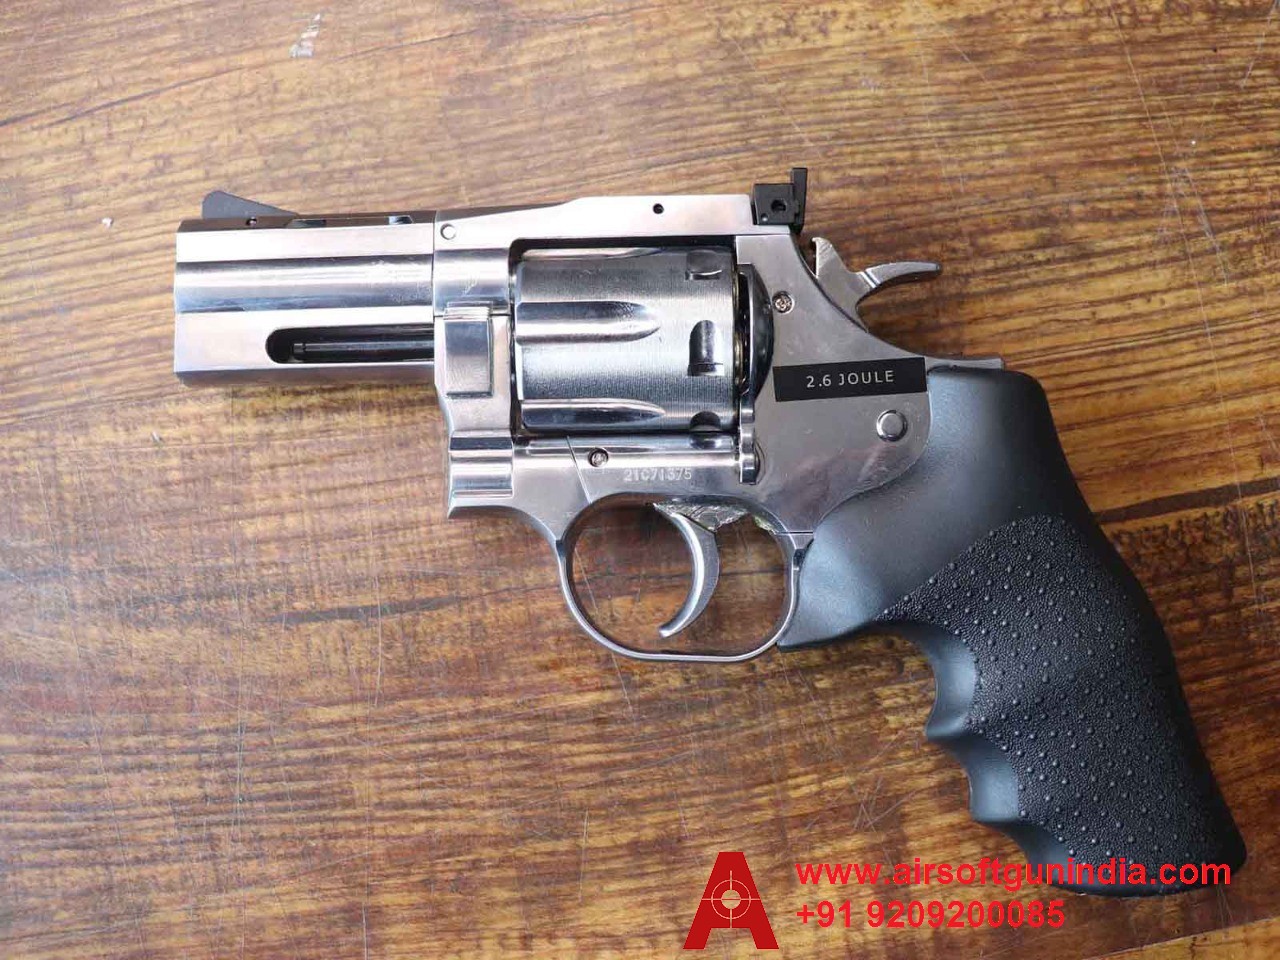 Dan Wesson 715 2.5 Inch .177Cal, 4.5mm Co2 Pellet Air Revolver By Airsoft Gun India